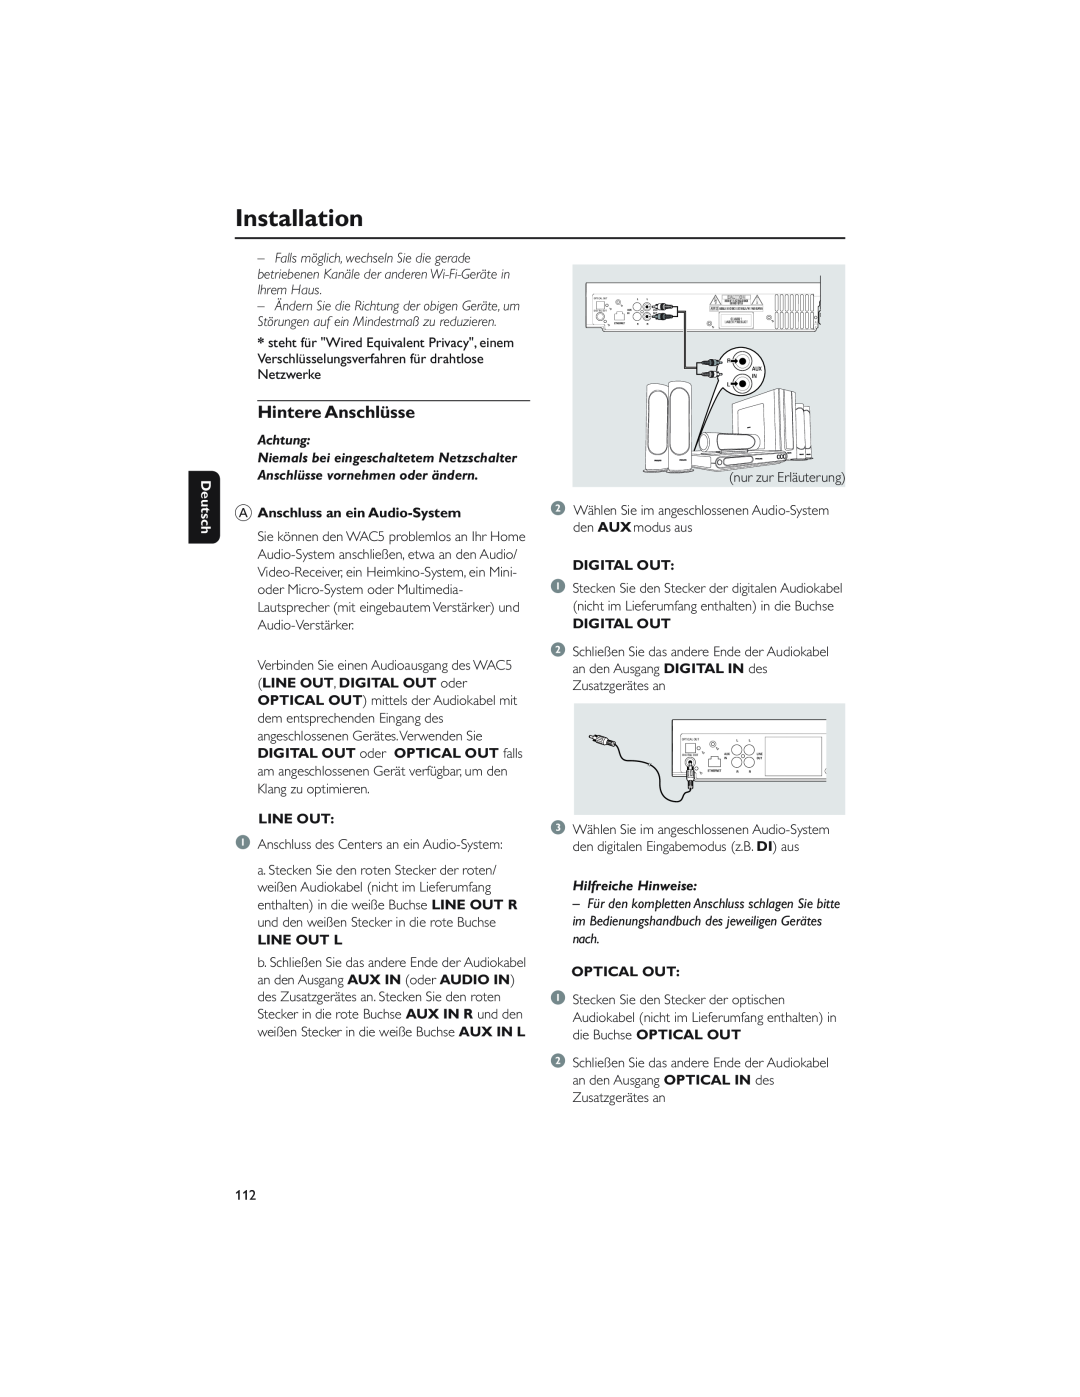 Philips WAC5 user manual Hintere Anschlüsse, Installation, Deutsch, Achtung, AAnschluss an ein Audio-System, Line Out L 